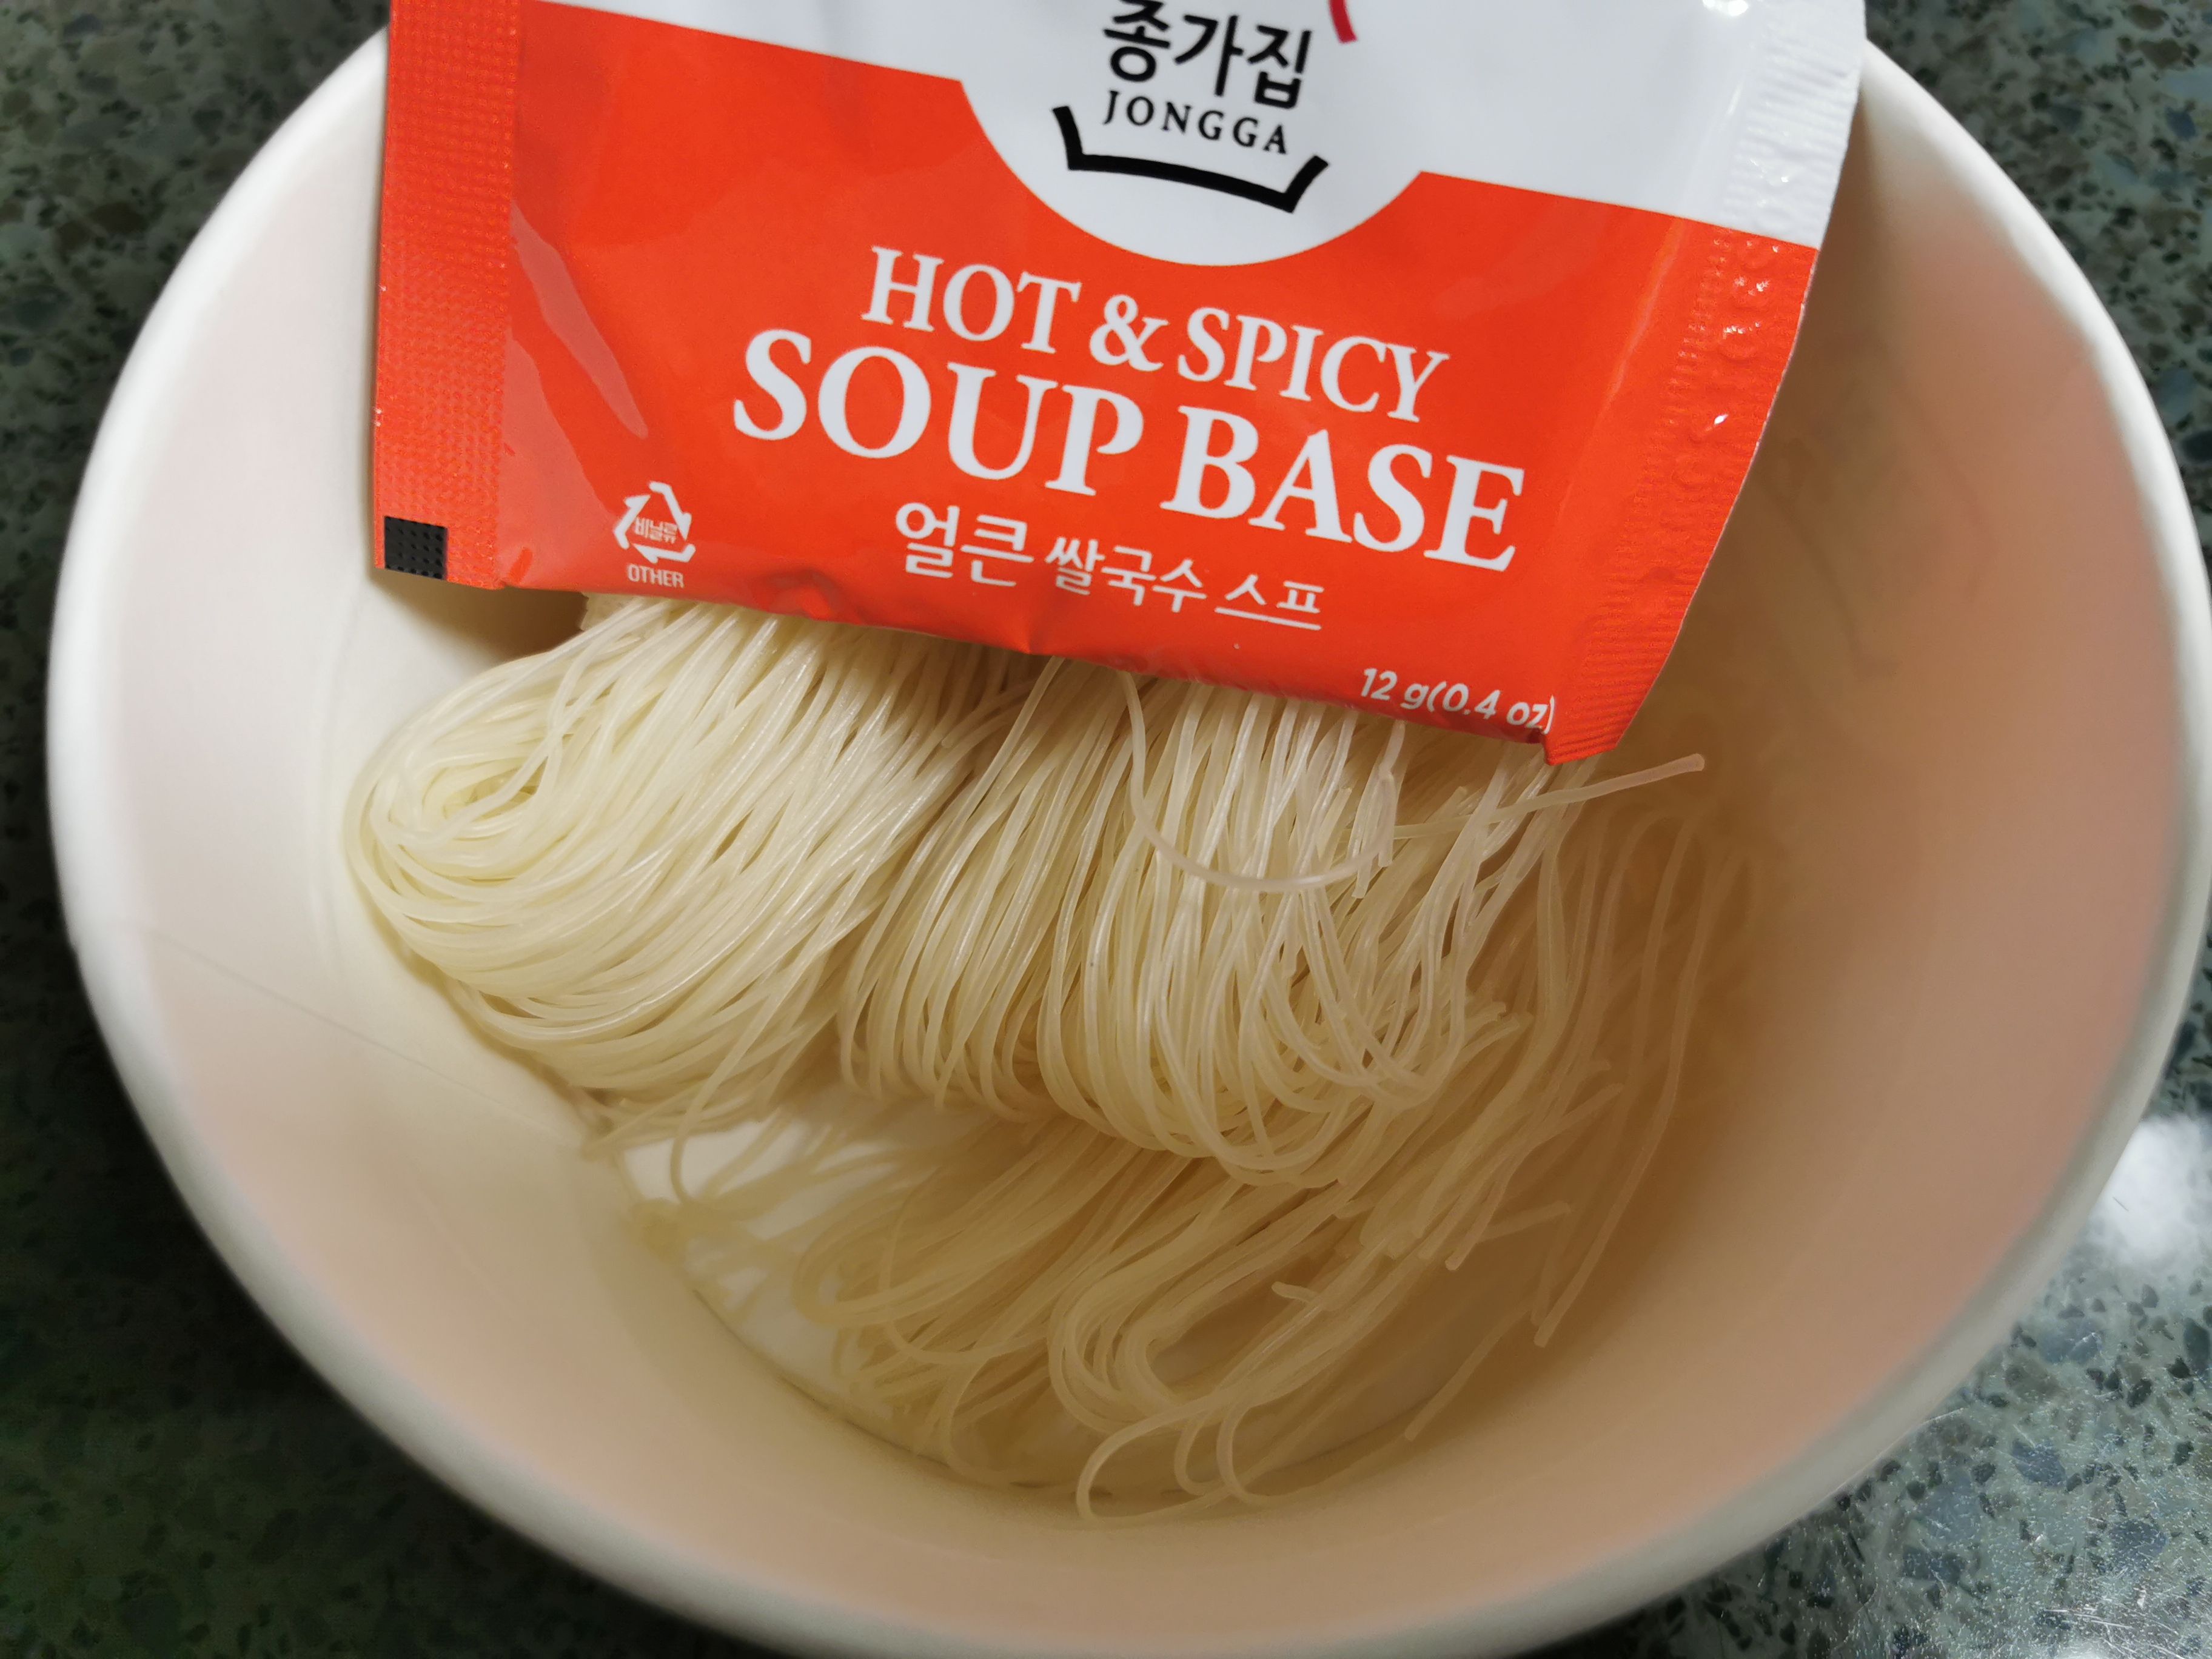 #2229: Jongga "Hot & Spicy Noodle" Bowl